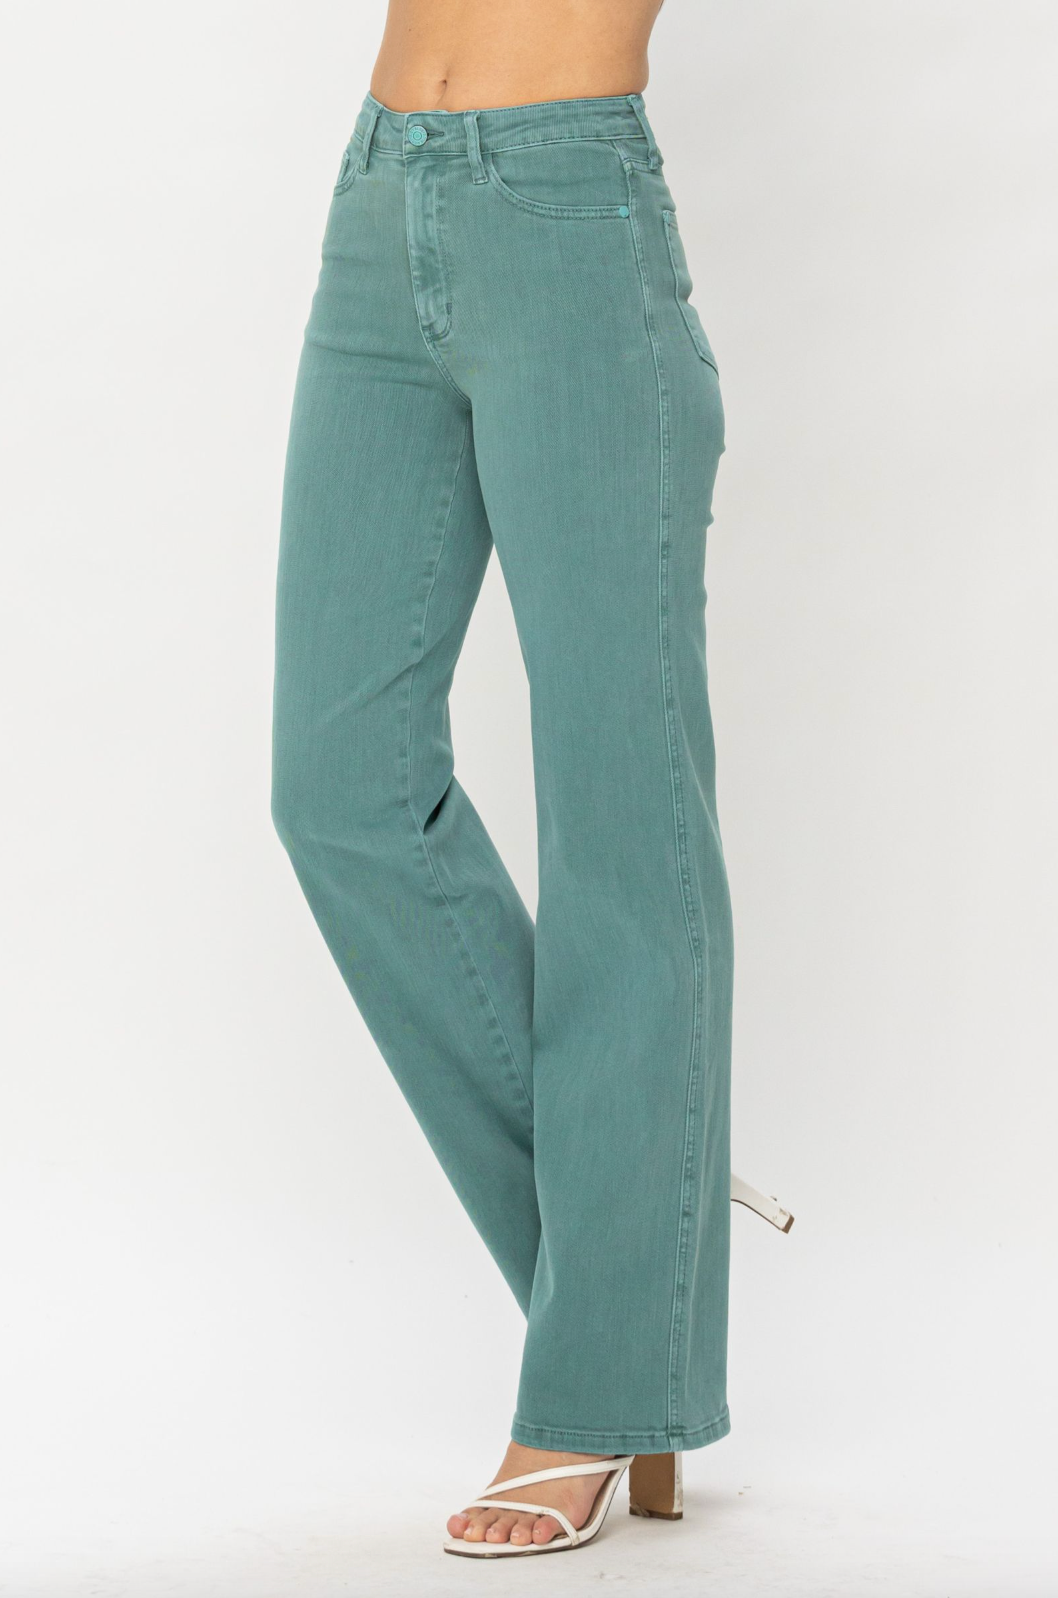 Judy Blue Straight Leg Sea Green Jeans